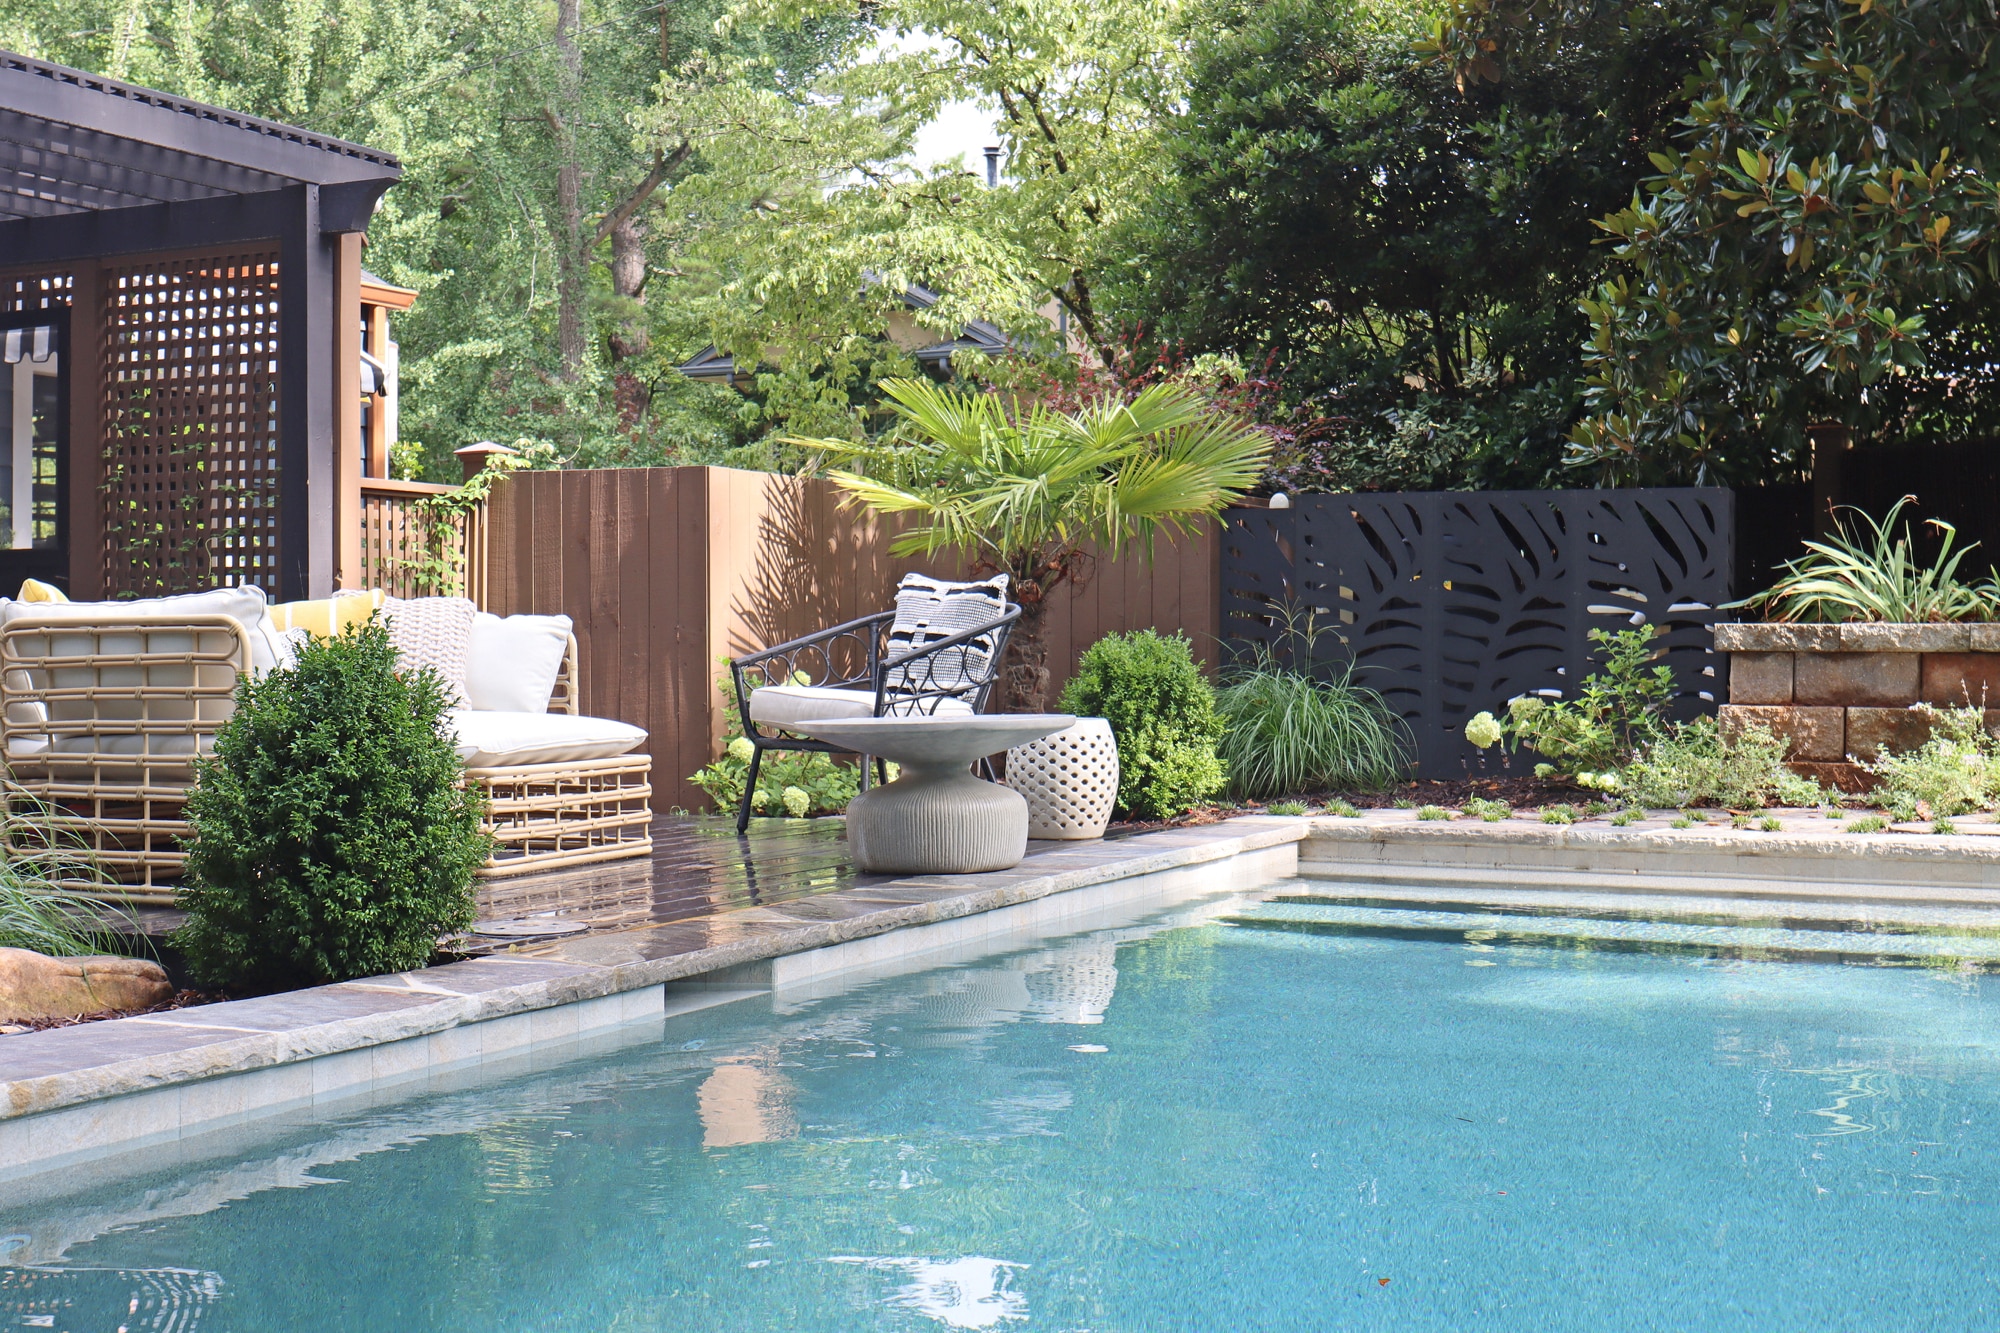 Modern backyard with pool and seating